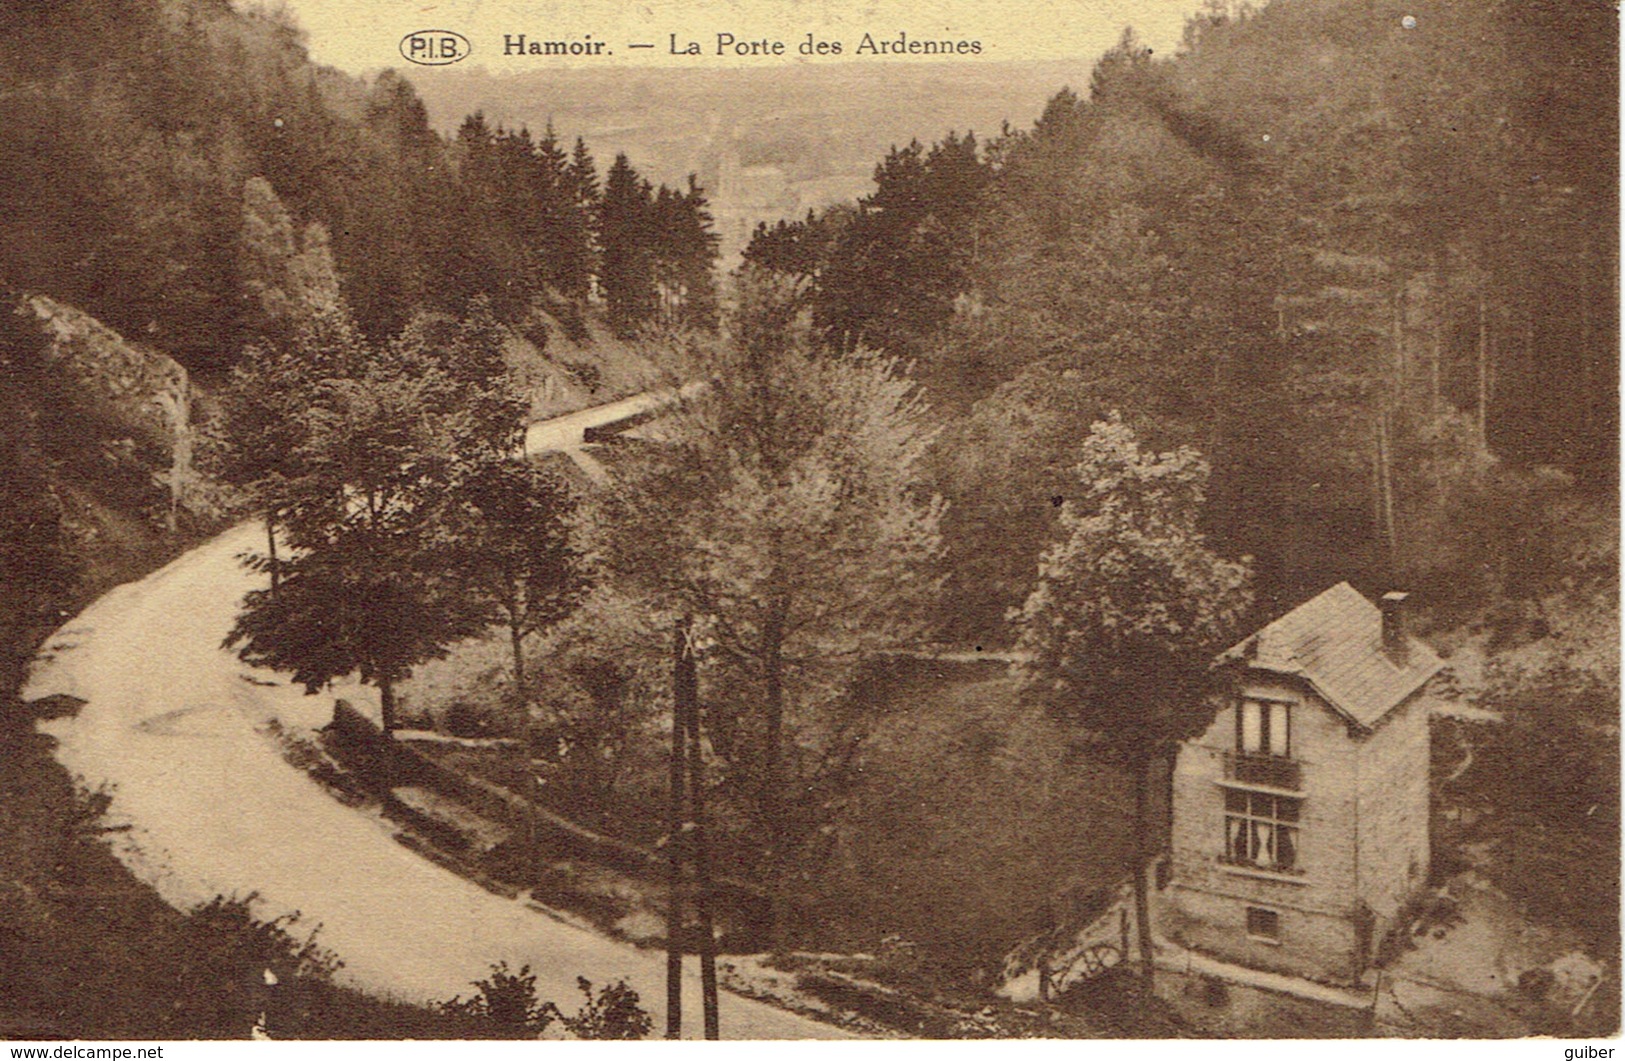 Hamoir La Porte Des Ardennes  P.I.B. Cornet Pladys - Hamoir